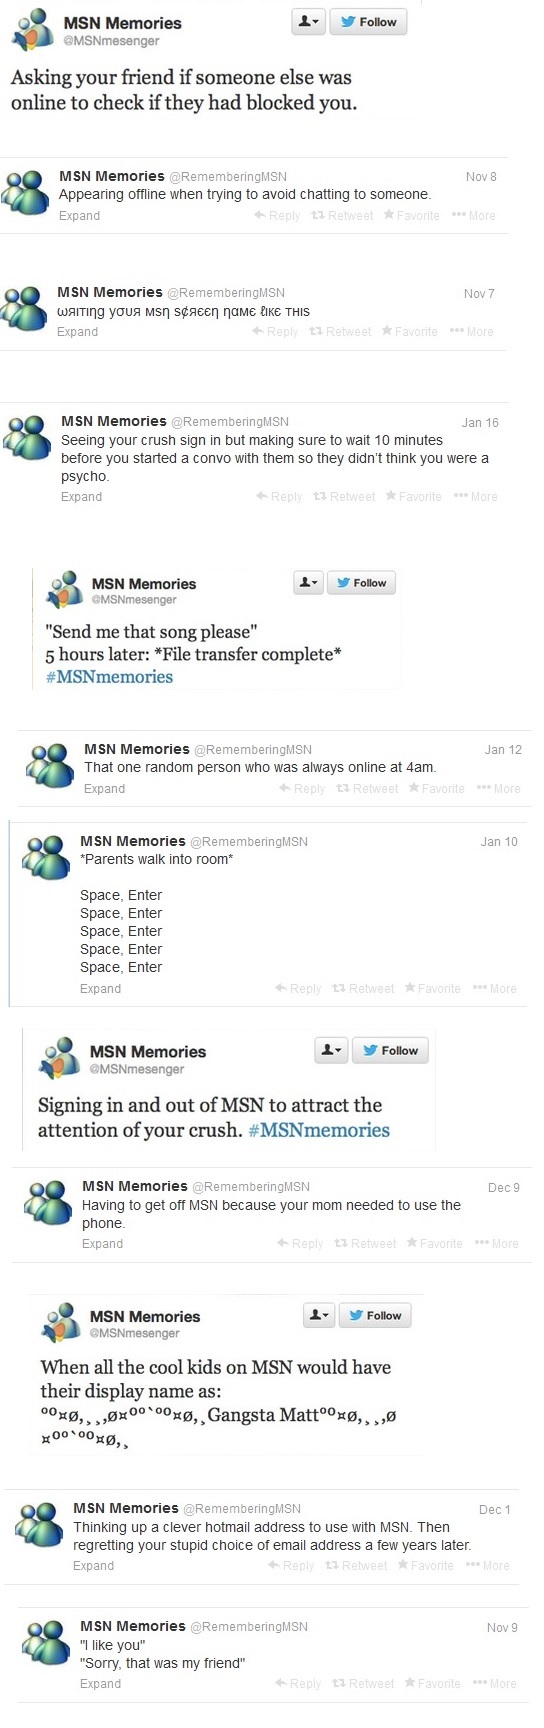 MSN Memories - The good ol' days